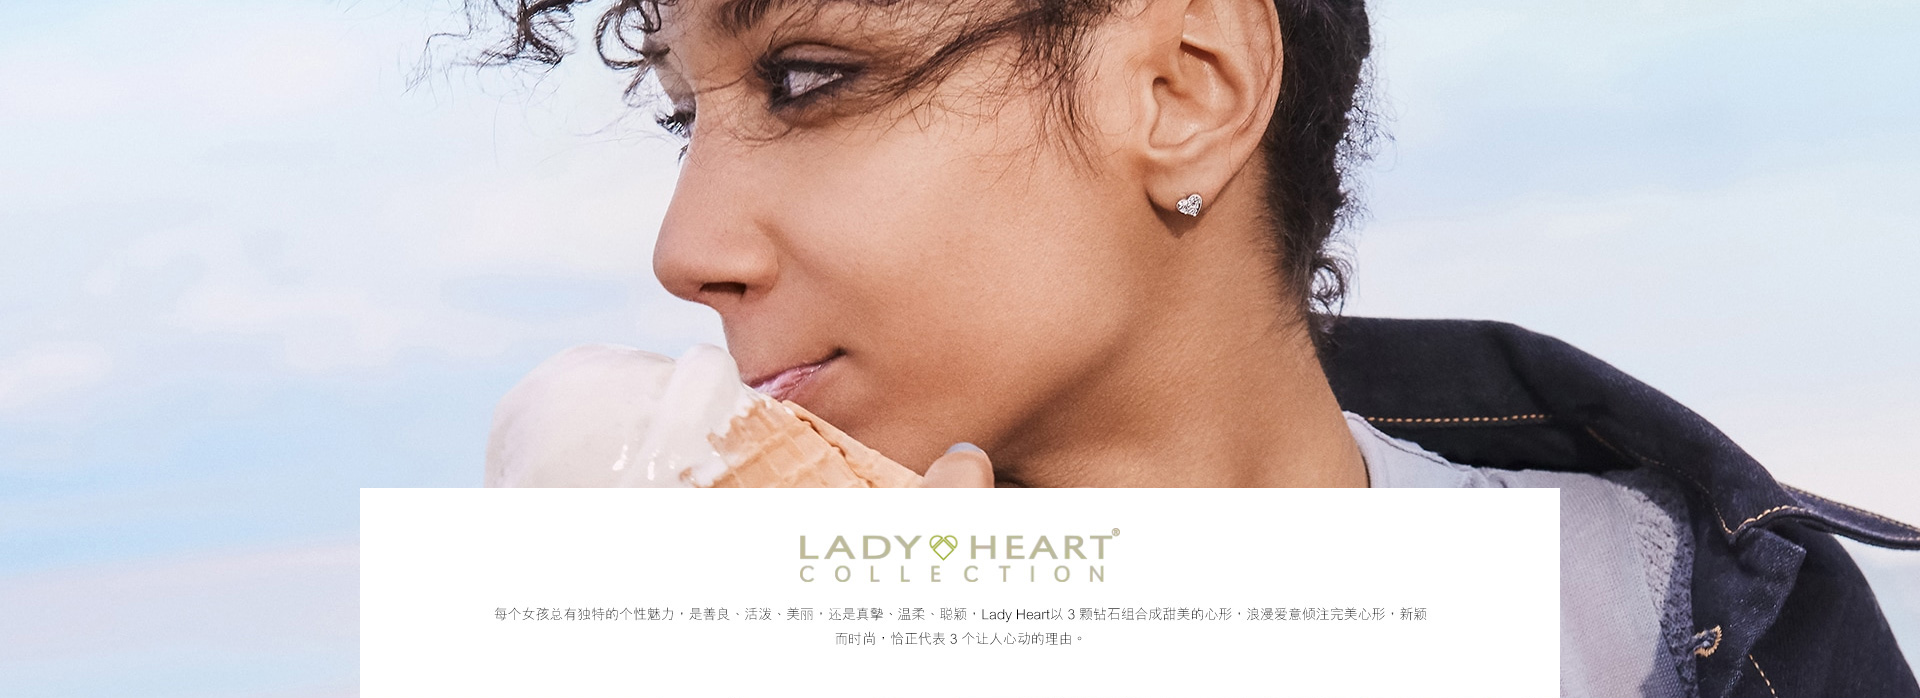 Lady-Heart专页01.jpg